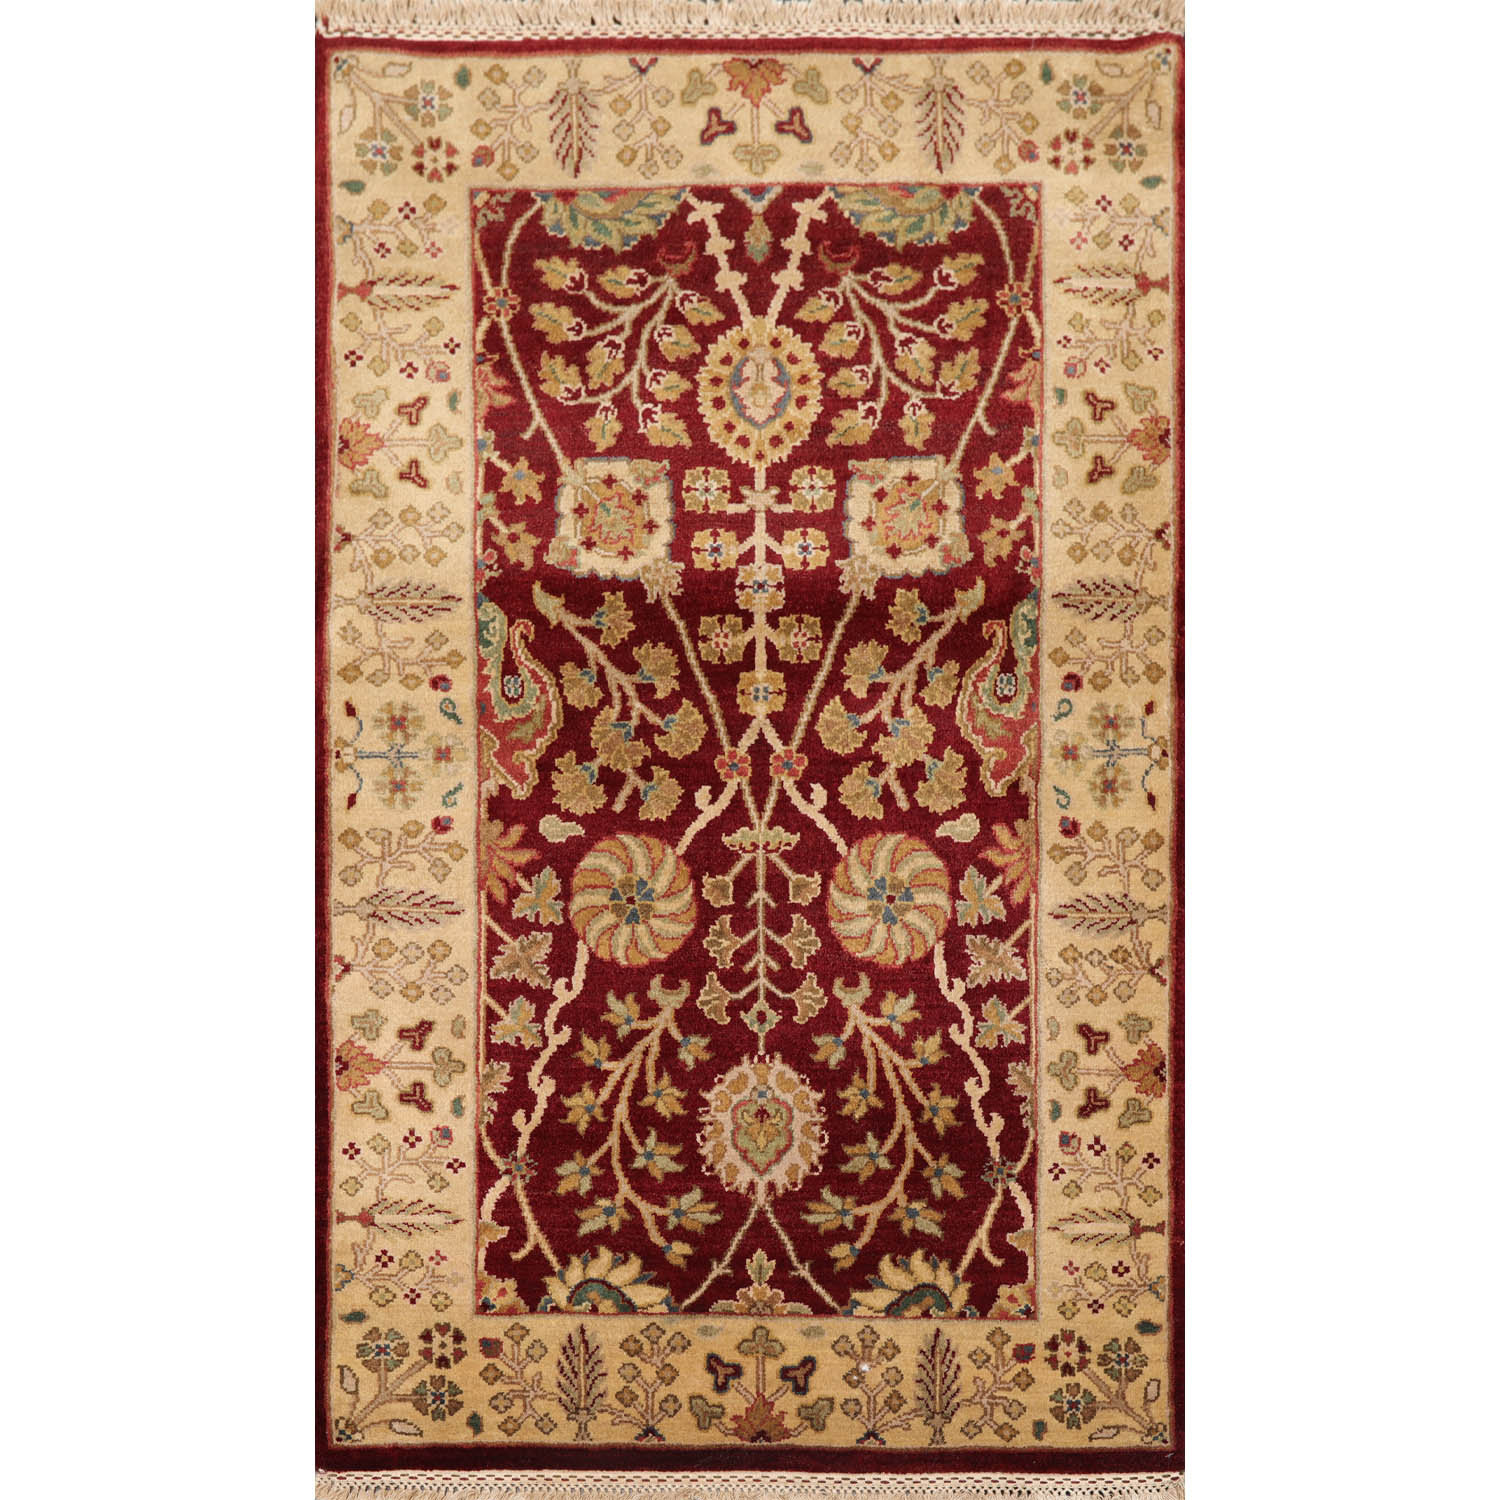 Wool 3' 3 x 6' 6 Deep Red/Rust Traditional Persian Chobi Design Handmade Agra Rug ft 